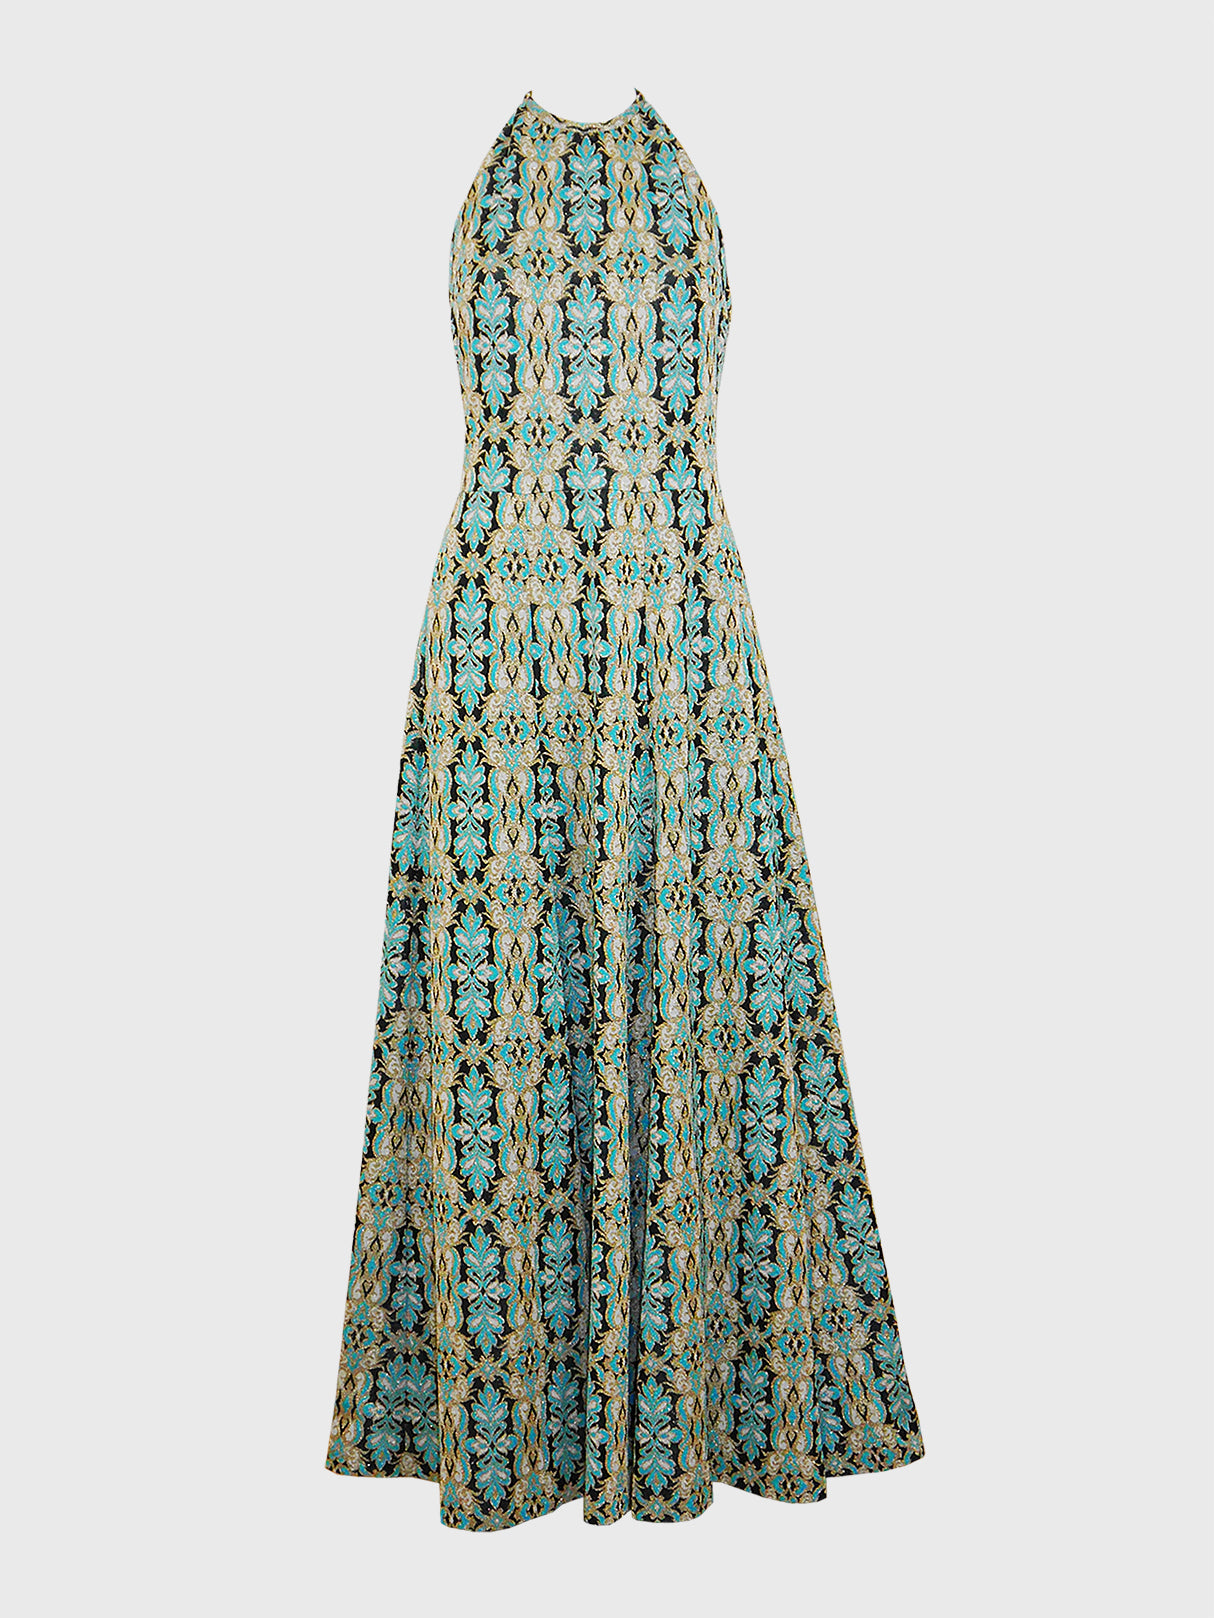 PIERRE BALMAIN 1960s Vintage Backless Maxi Evening Dress Gown